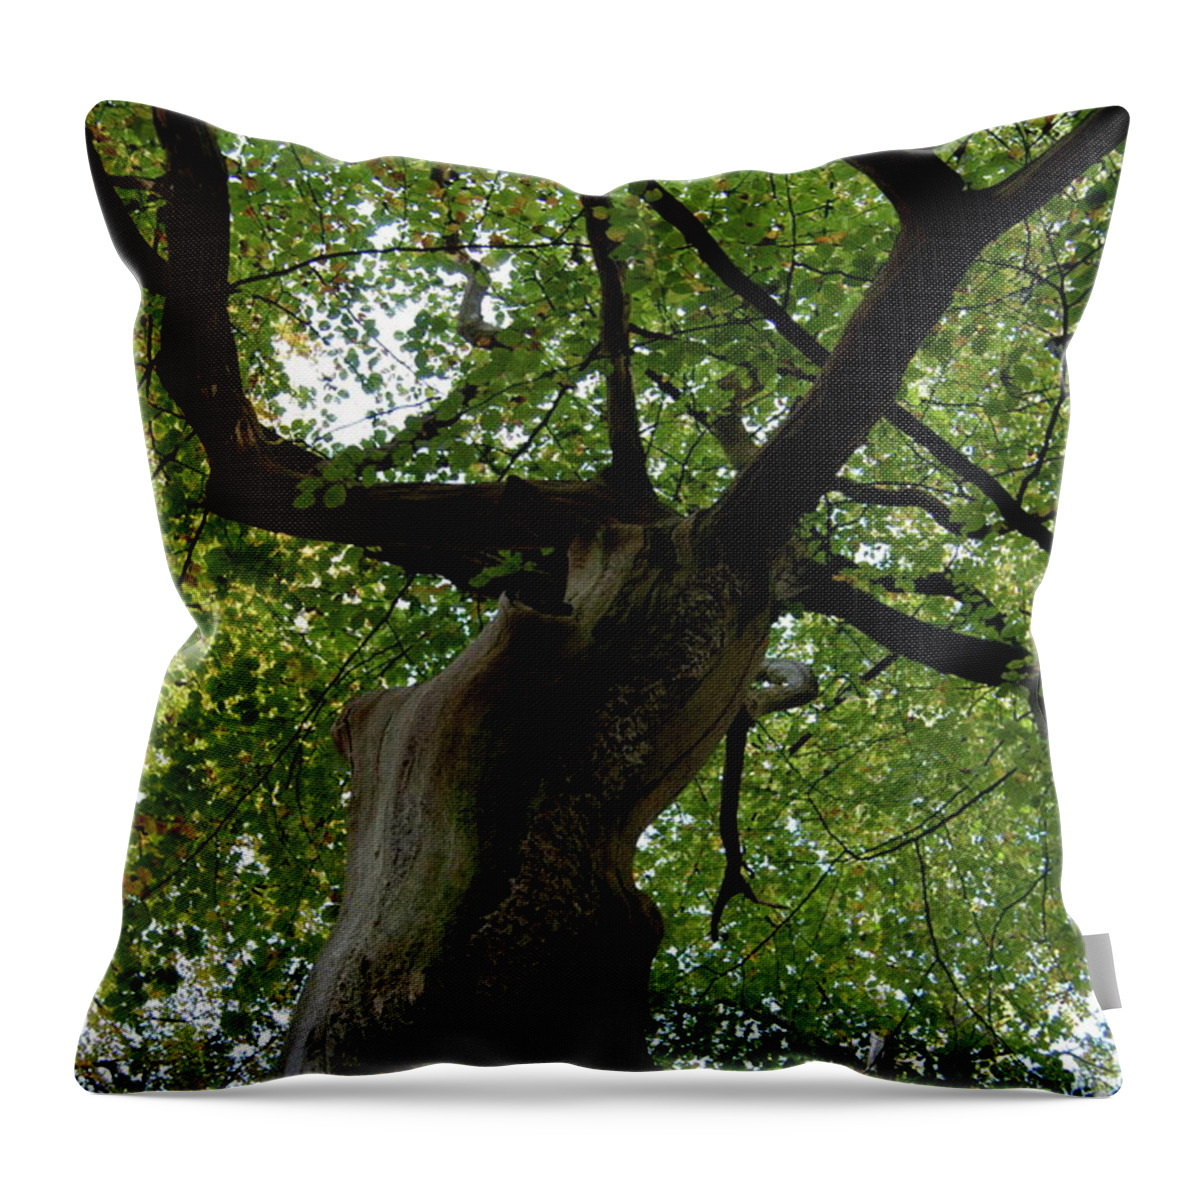 Beech Throw Pillow featuring the photograph European beech tree New Forest England by Loren Dowding